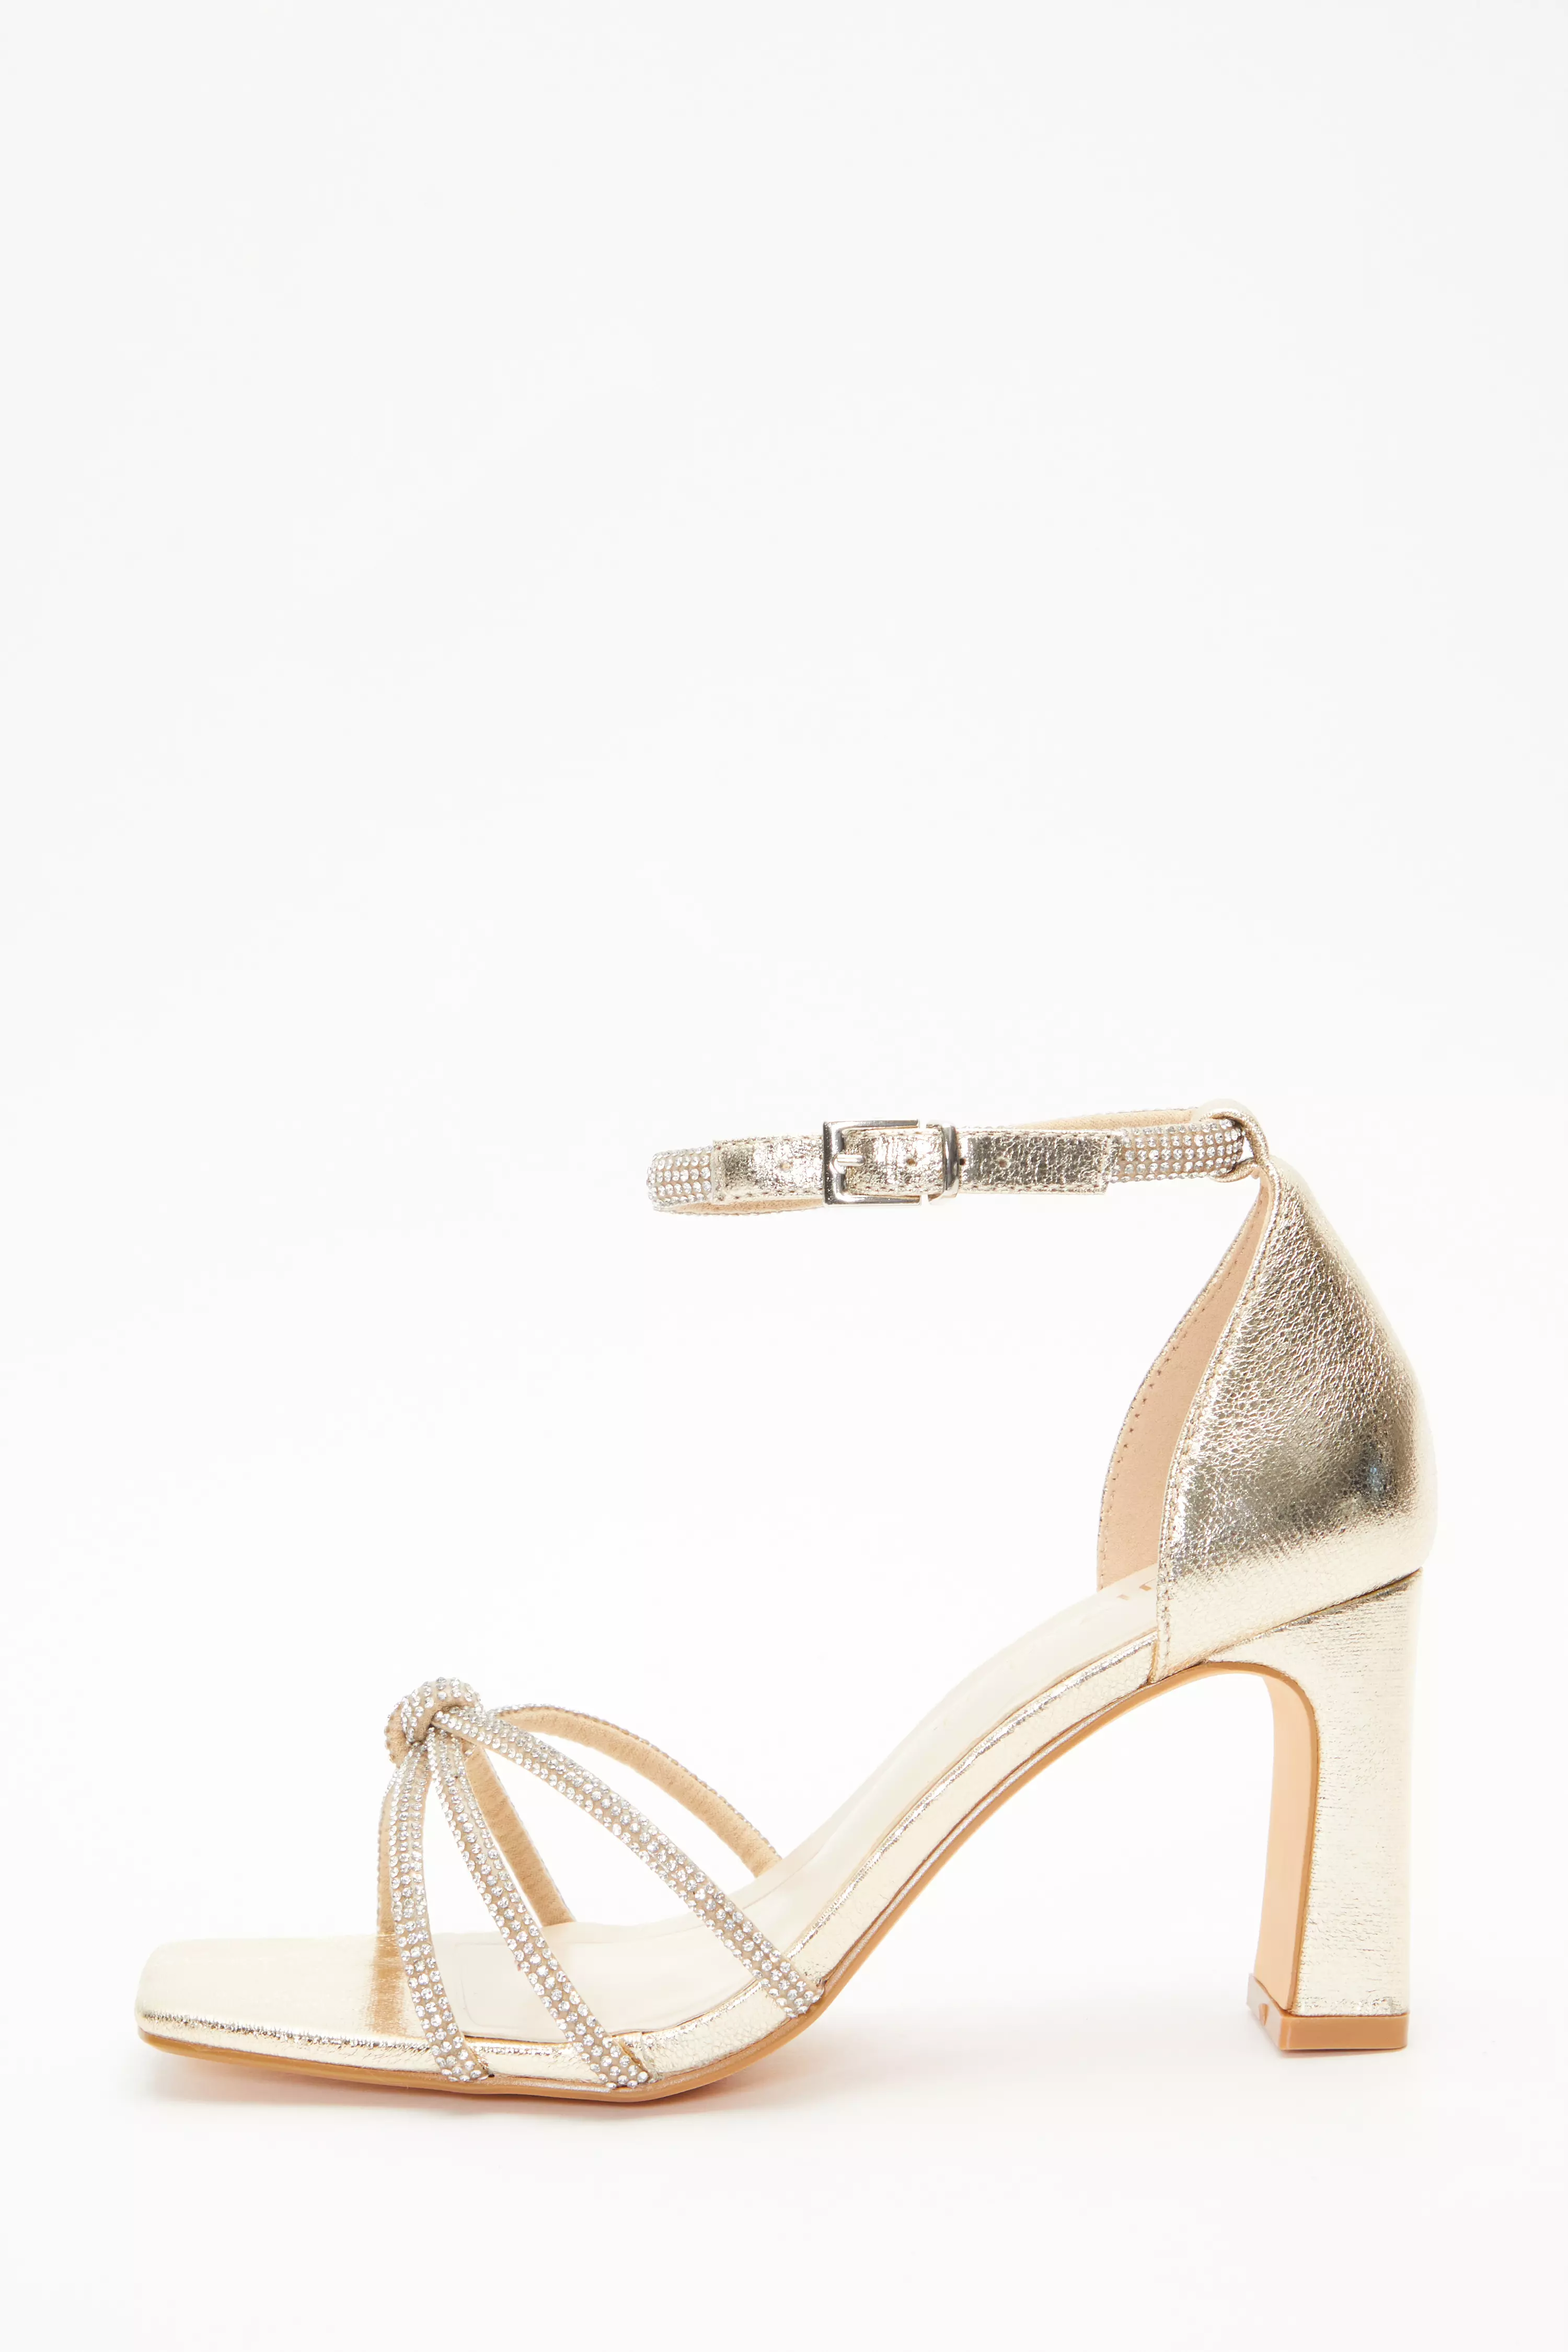 Wide Fit Gold Foil Diamante Heeled Sandals - QUIZ Clothing